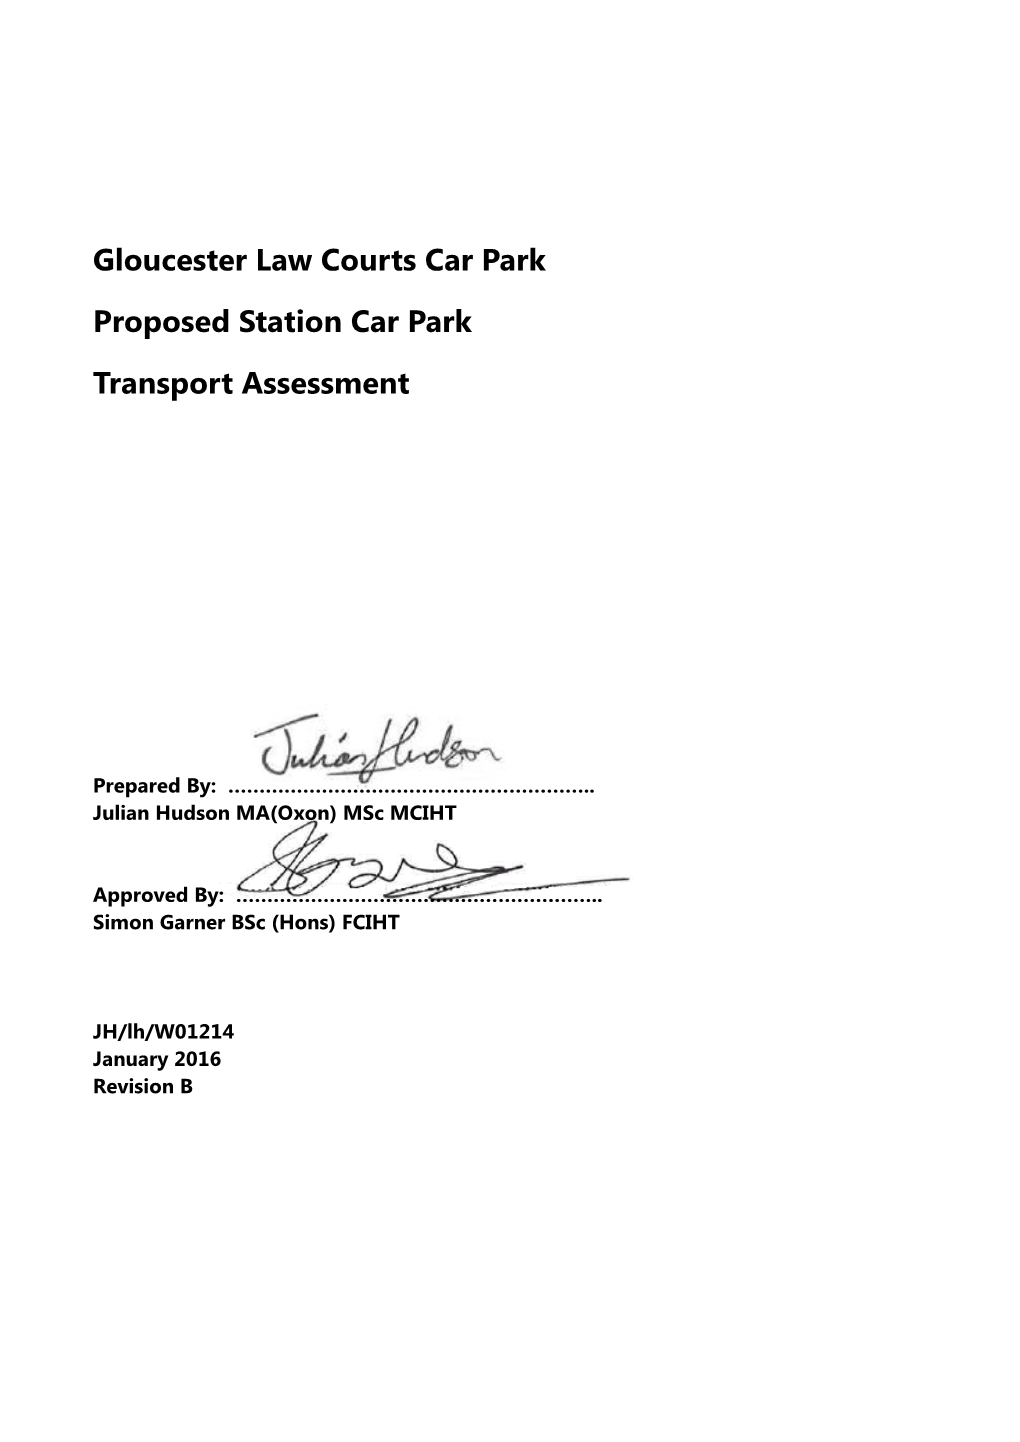 Gloucester Law Courts Car Park Proposed Station Car Park Transport Assessment